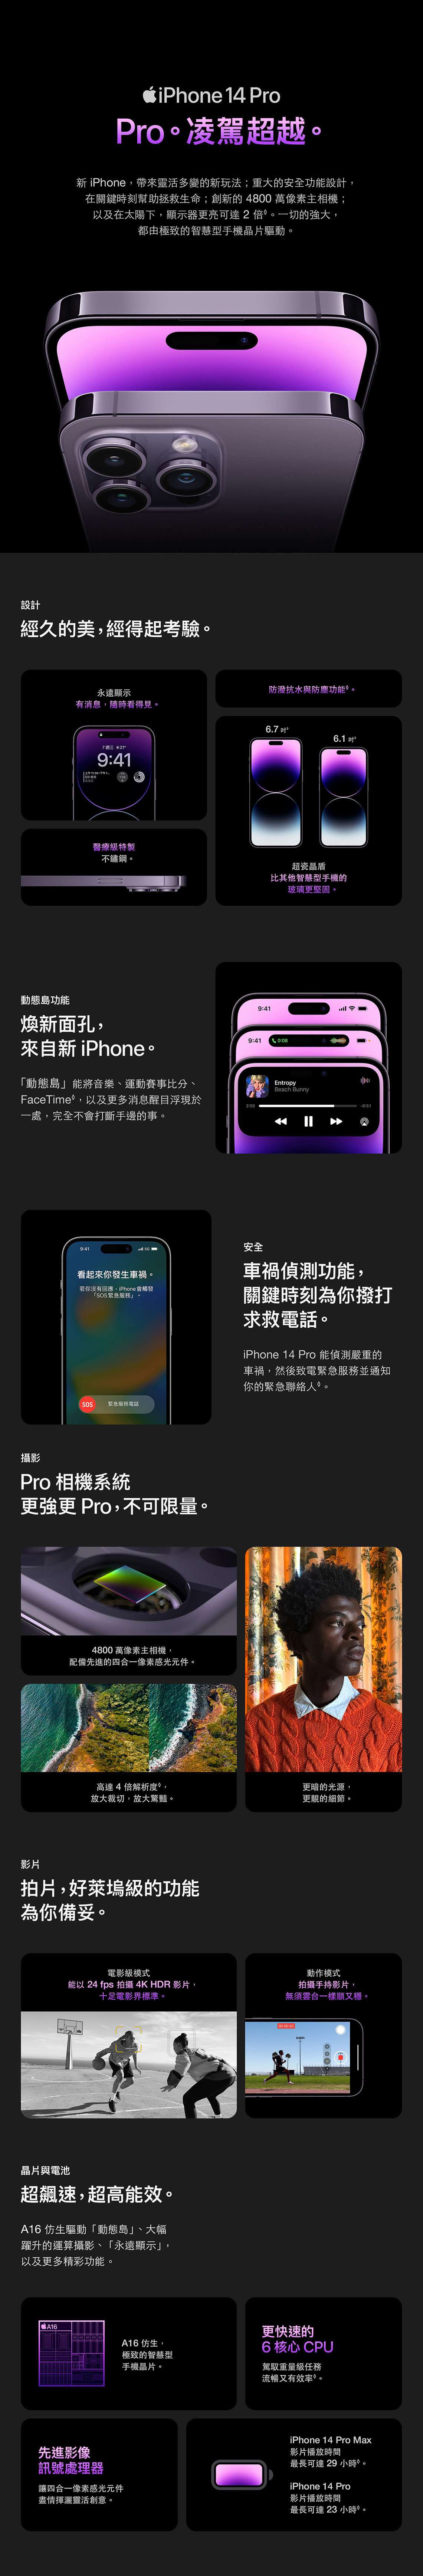 iPhone 14 Pro介紹